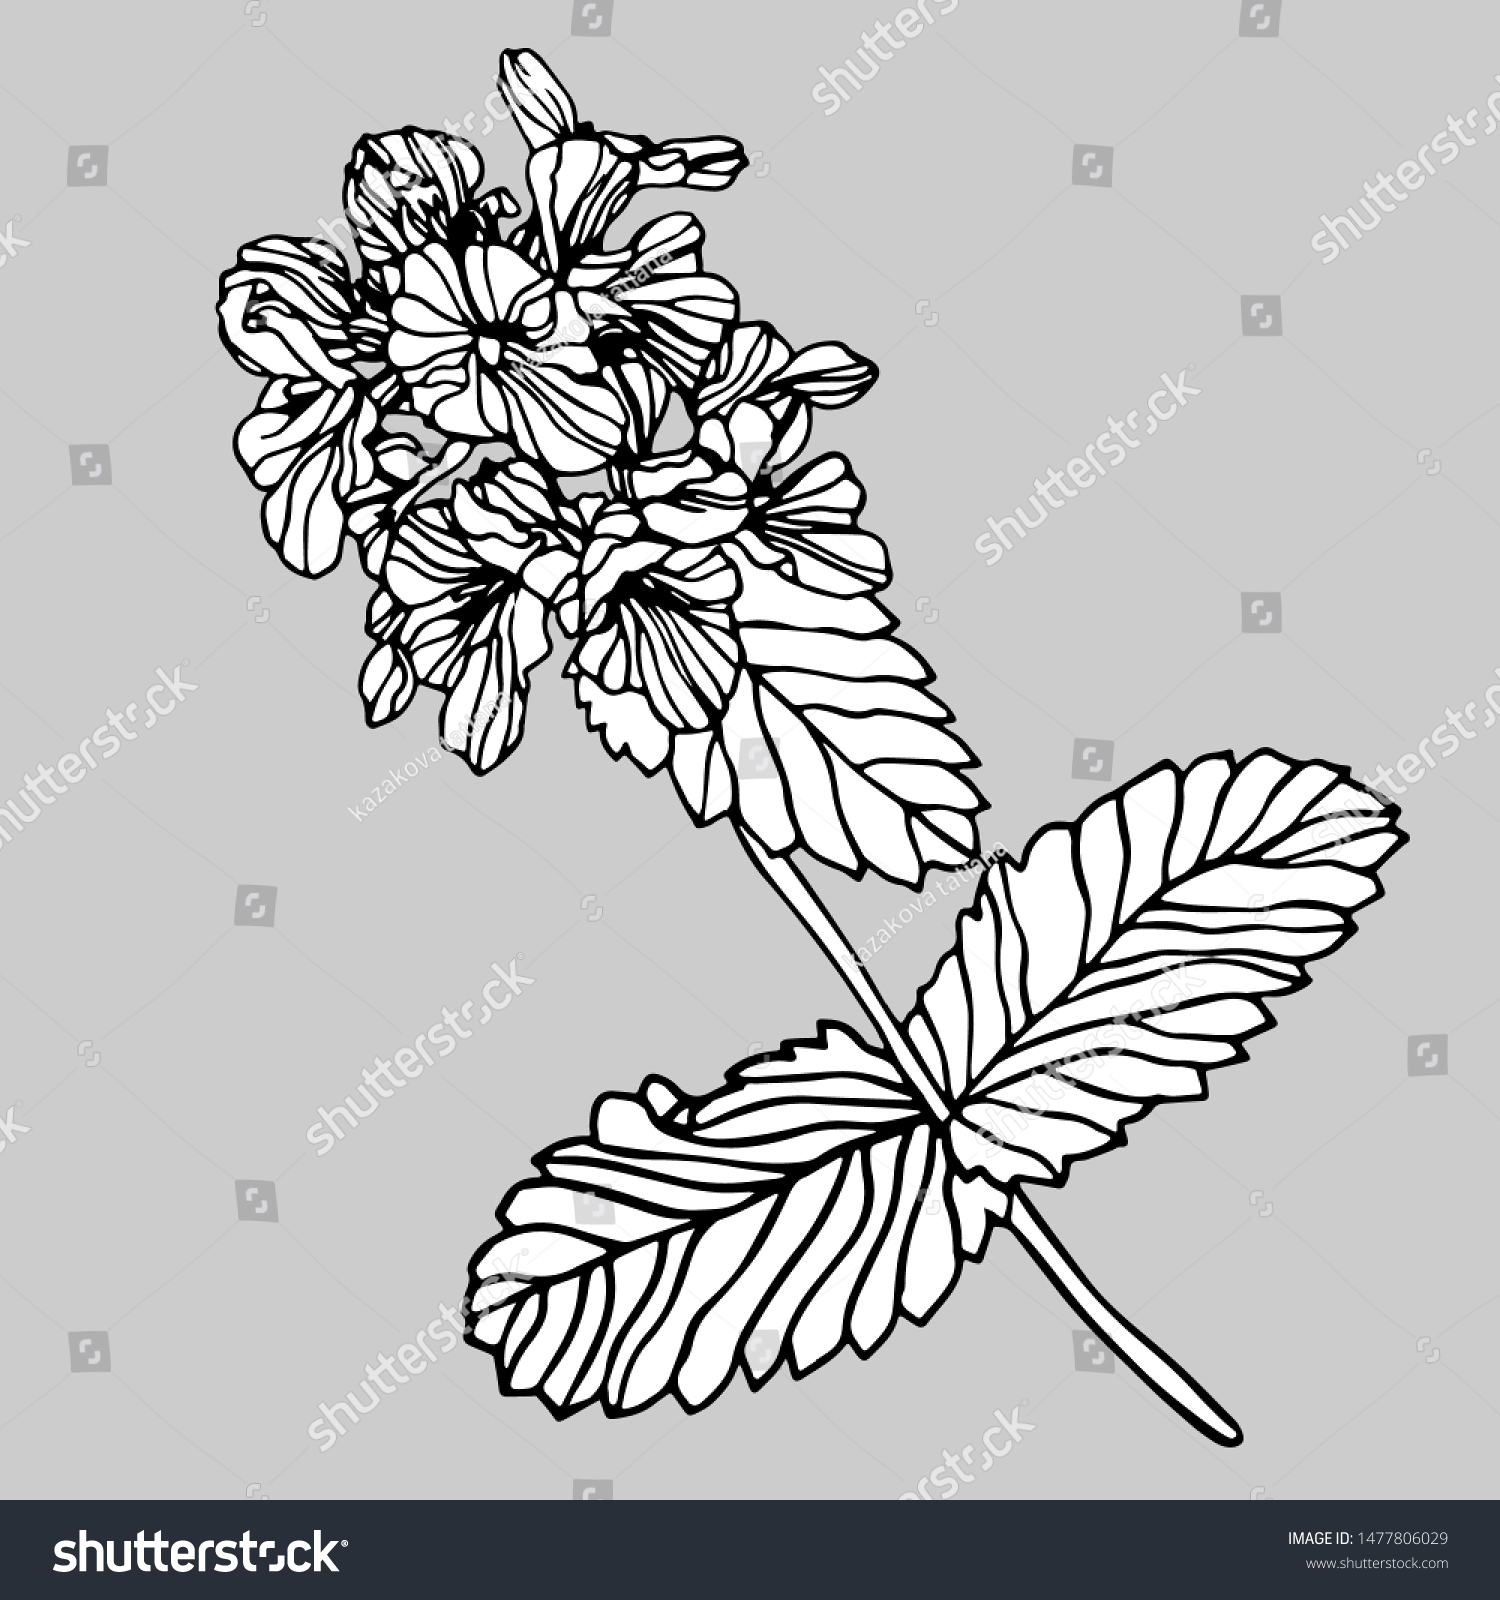 Isolated Design Decorative Delphinium Flowers Black Stock Vector Royalty Free 1477806029